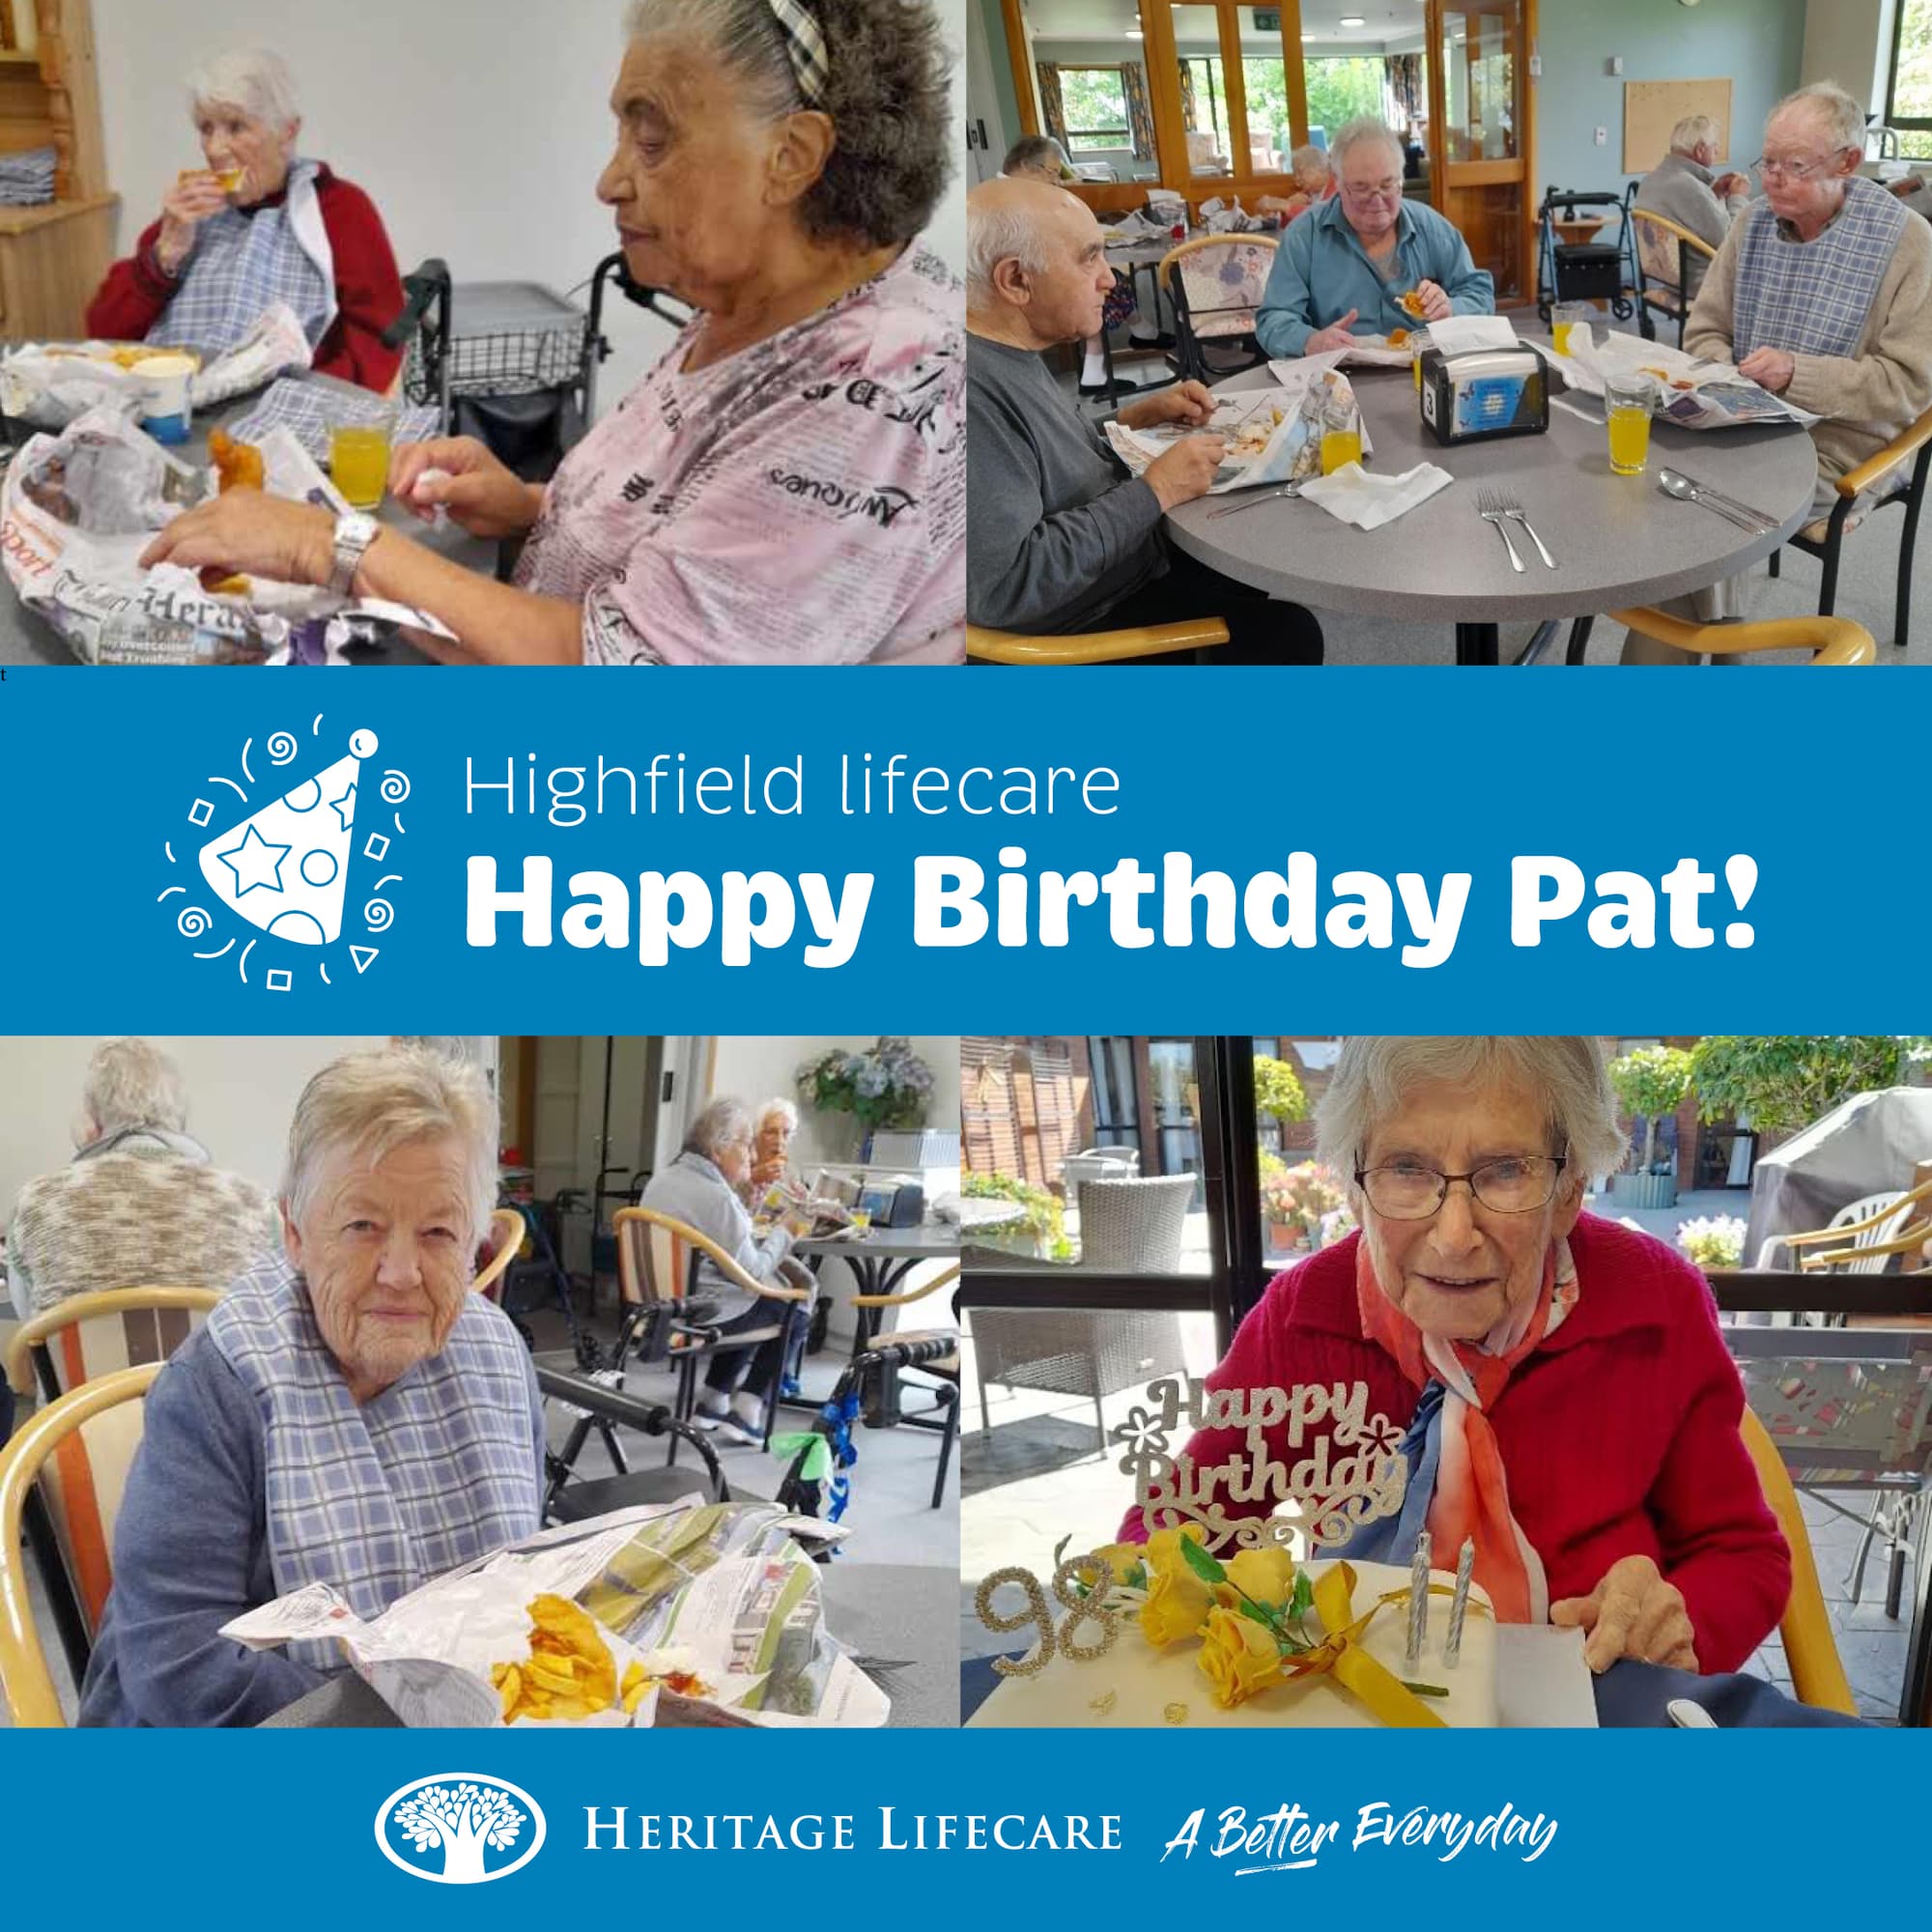 Happy Birthday Pat!